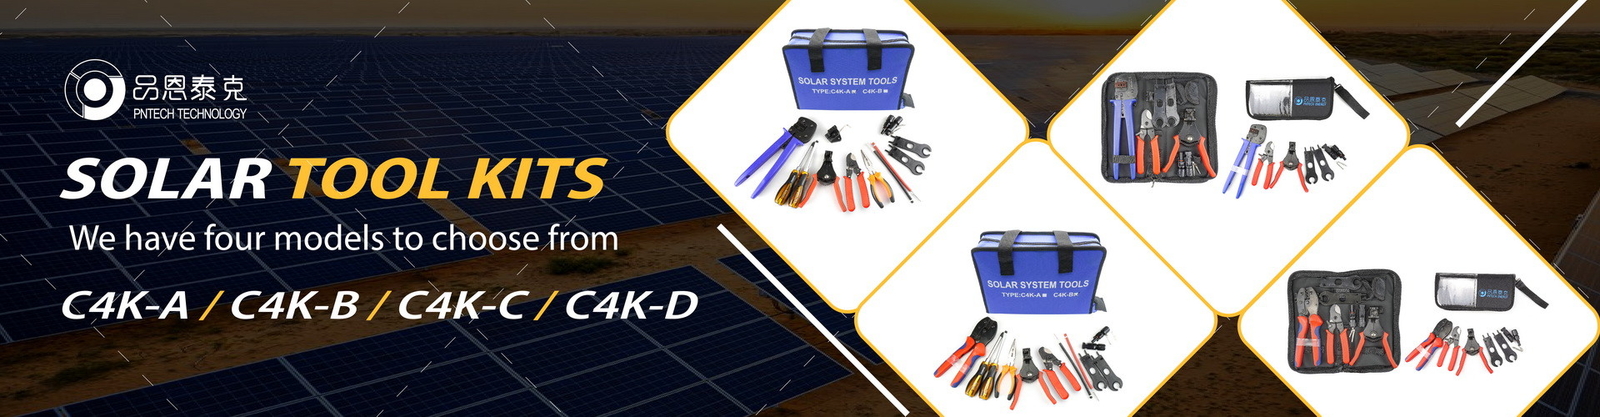 Qualität Solar-PV-Kabel usine